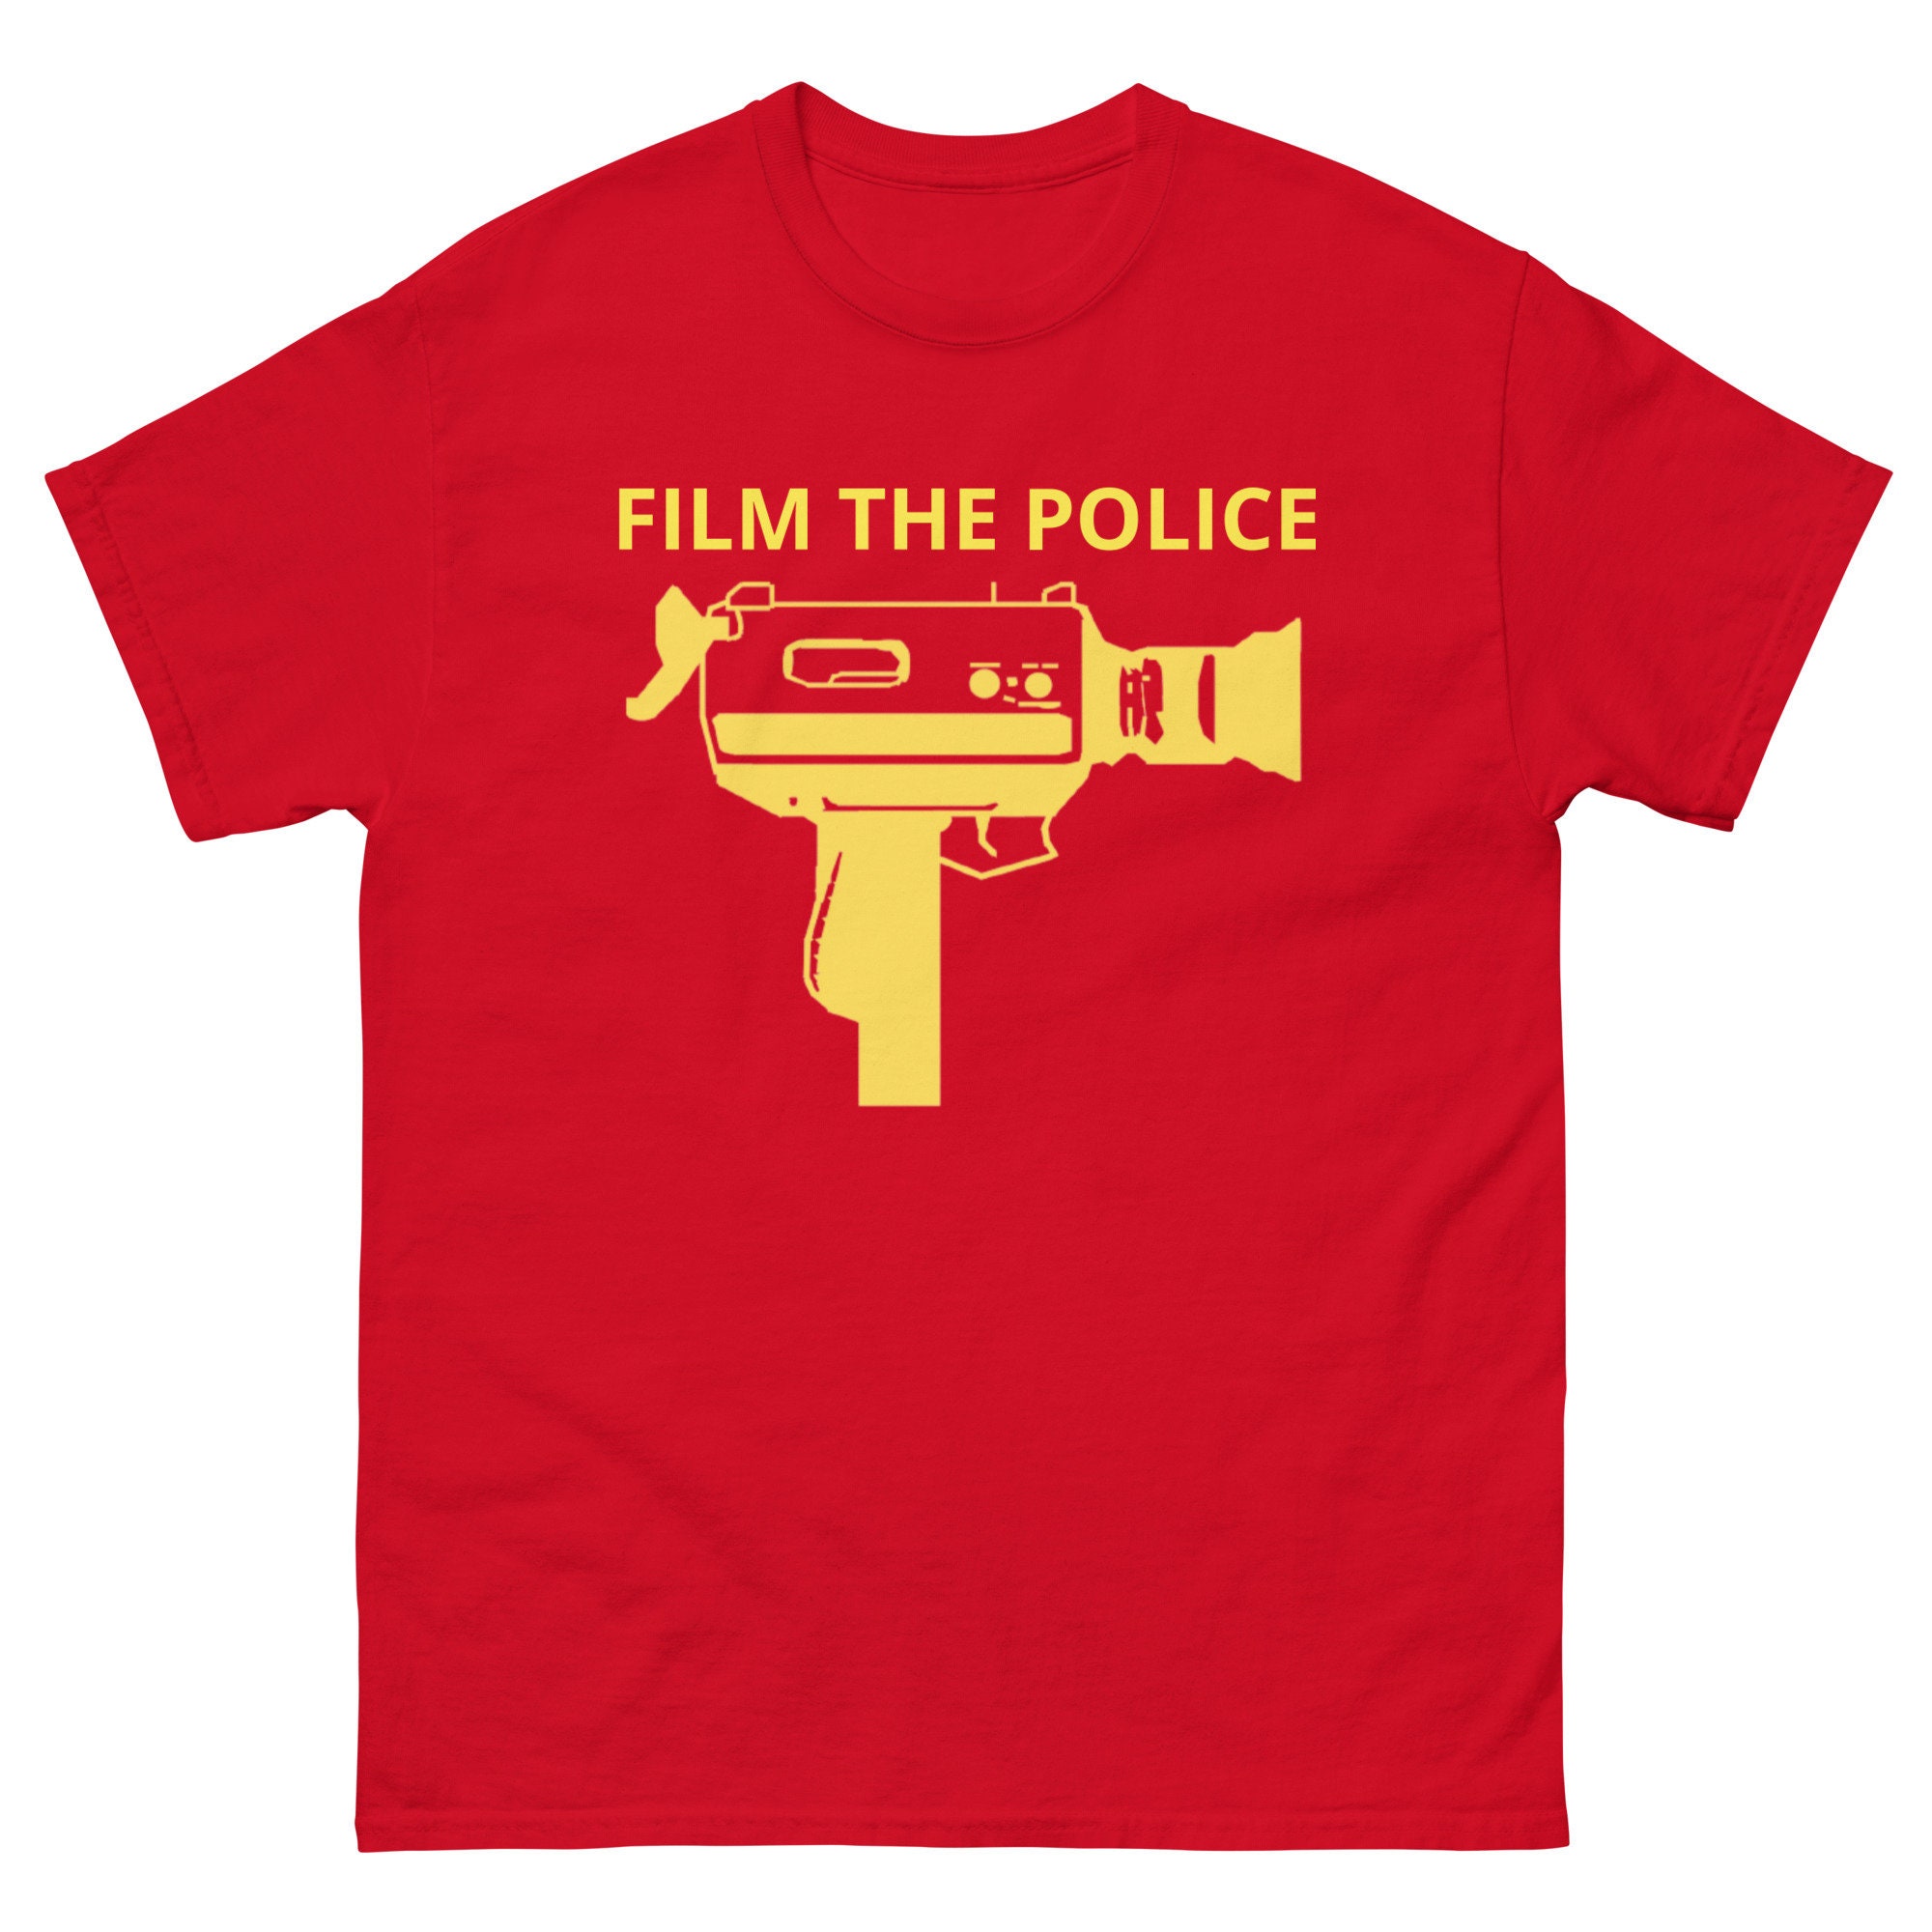 Discover Original Film The Police T-shirt - Yellow